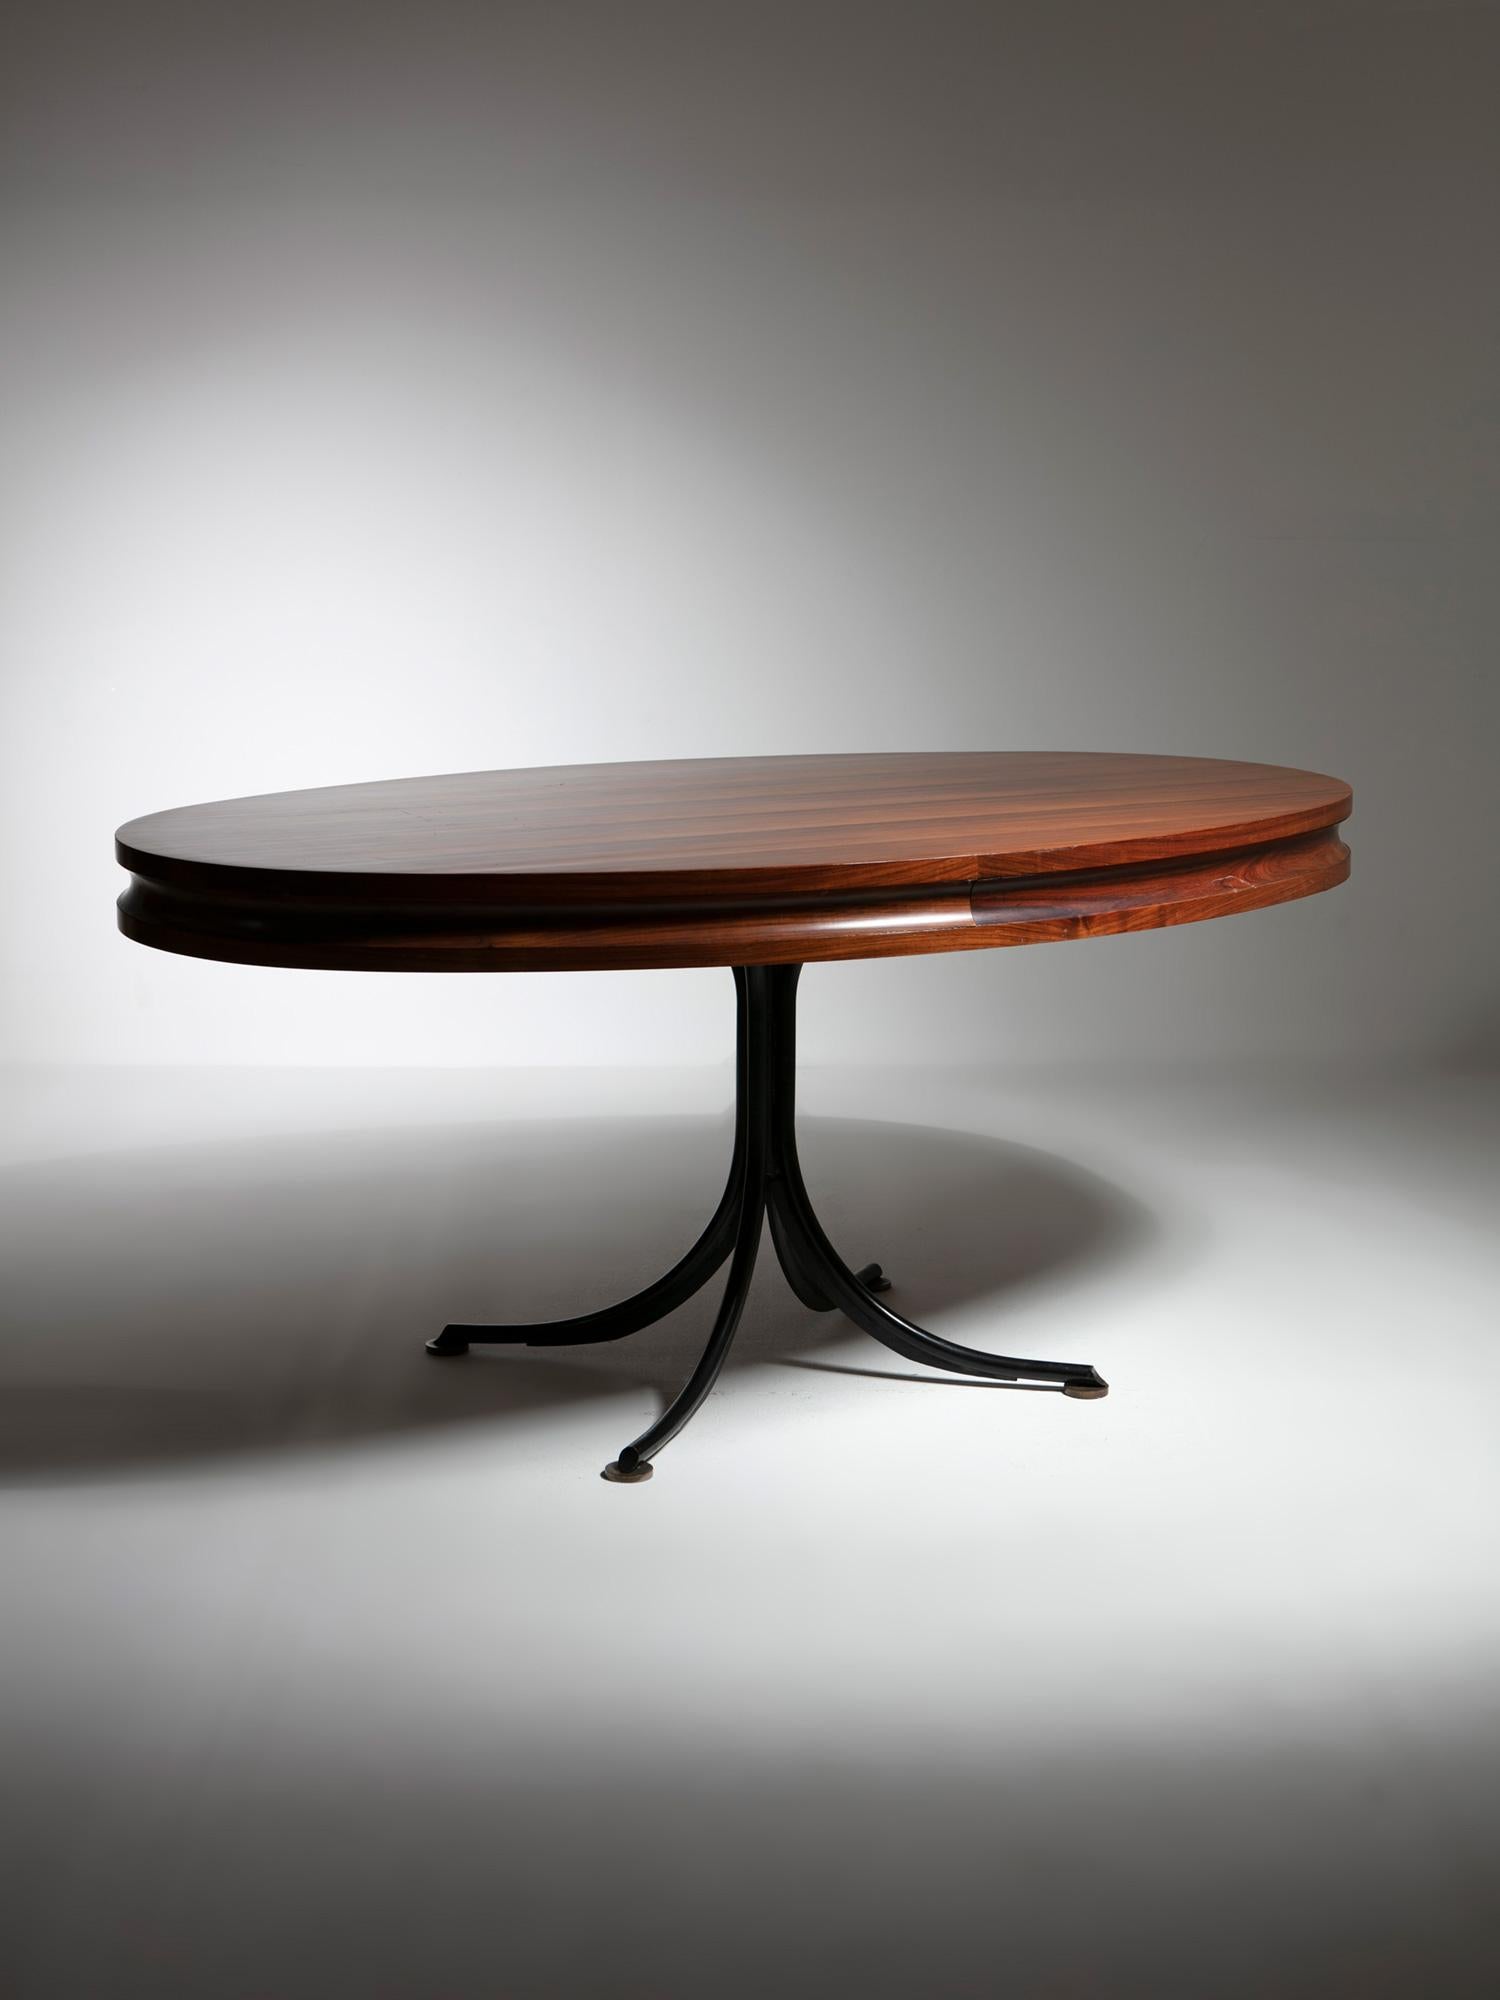 Custom made Italian 60s oval wood dining table by Adelmo Rascaroli.
Black metal base with brass feet and wood top.